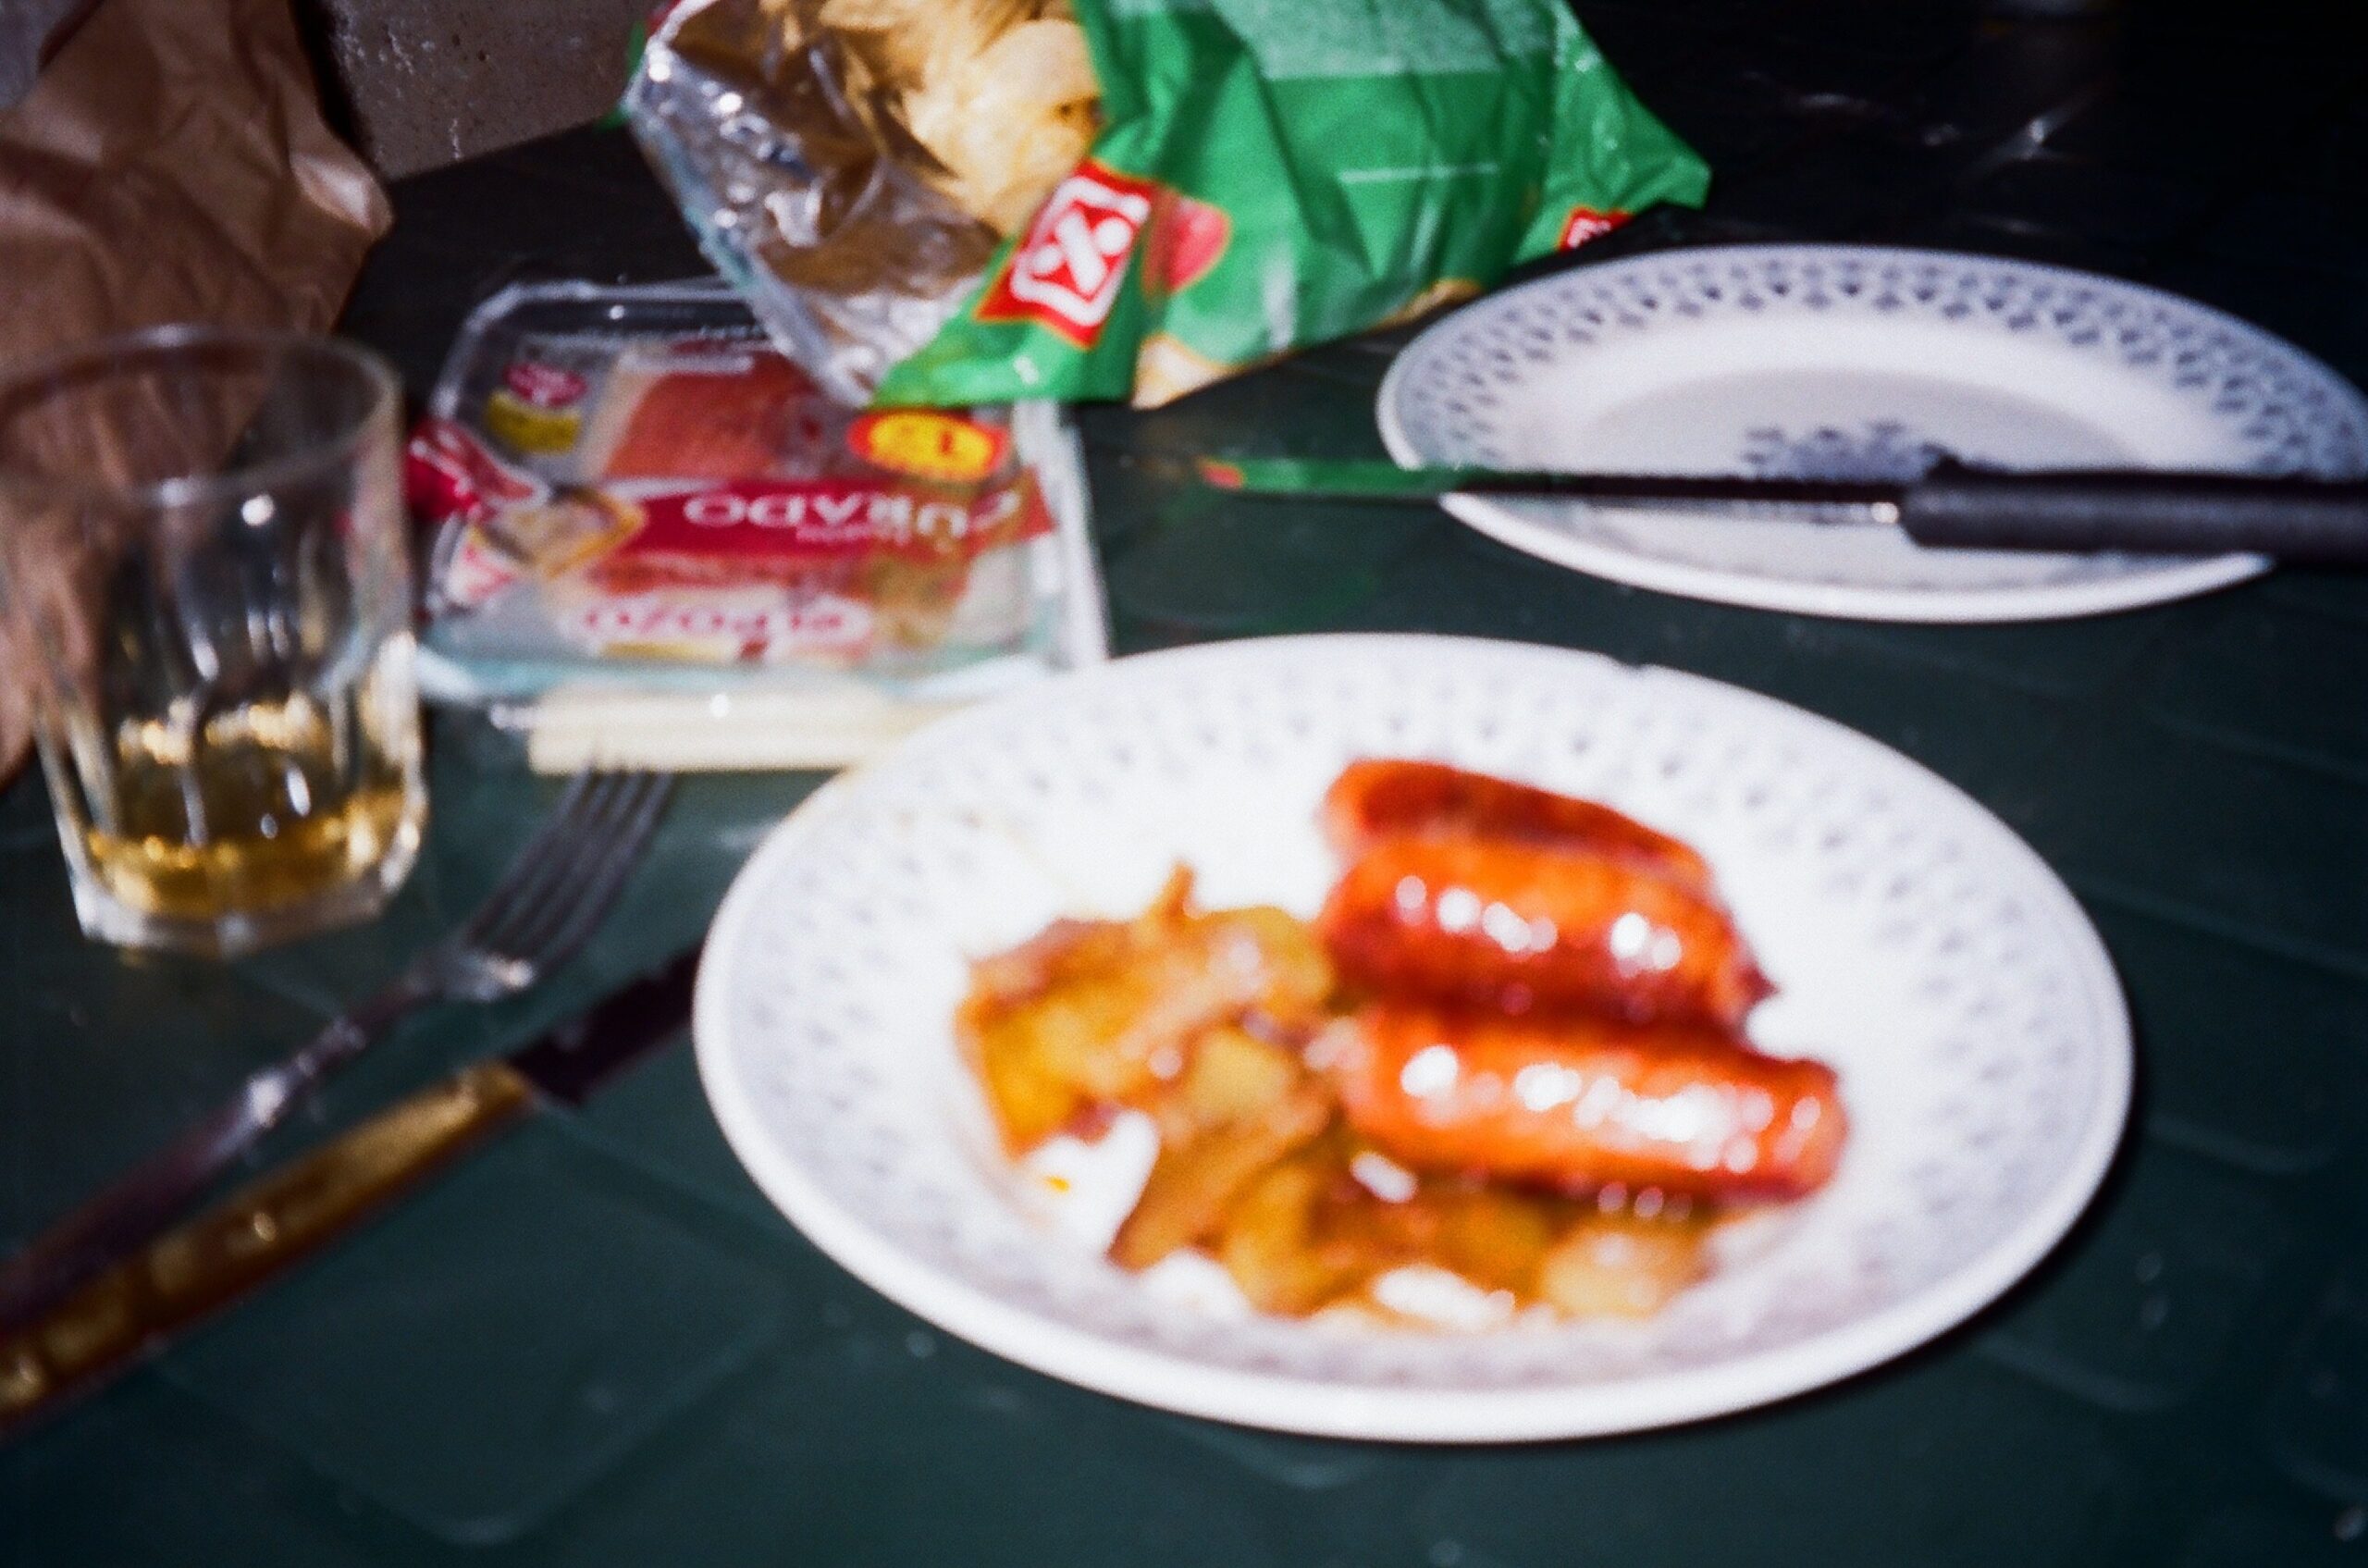 Chorizo and fried potatoes on a plate.